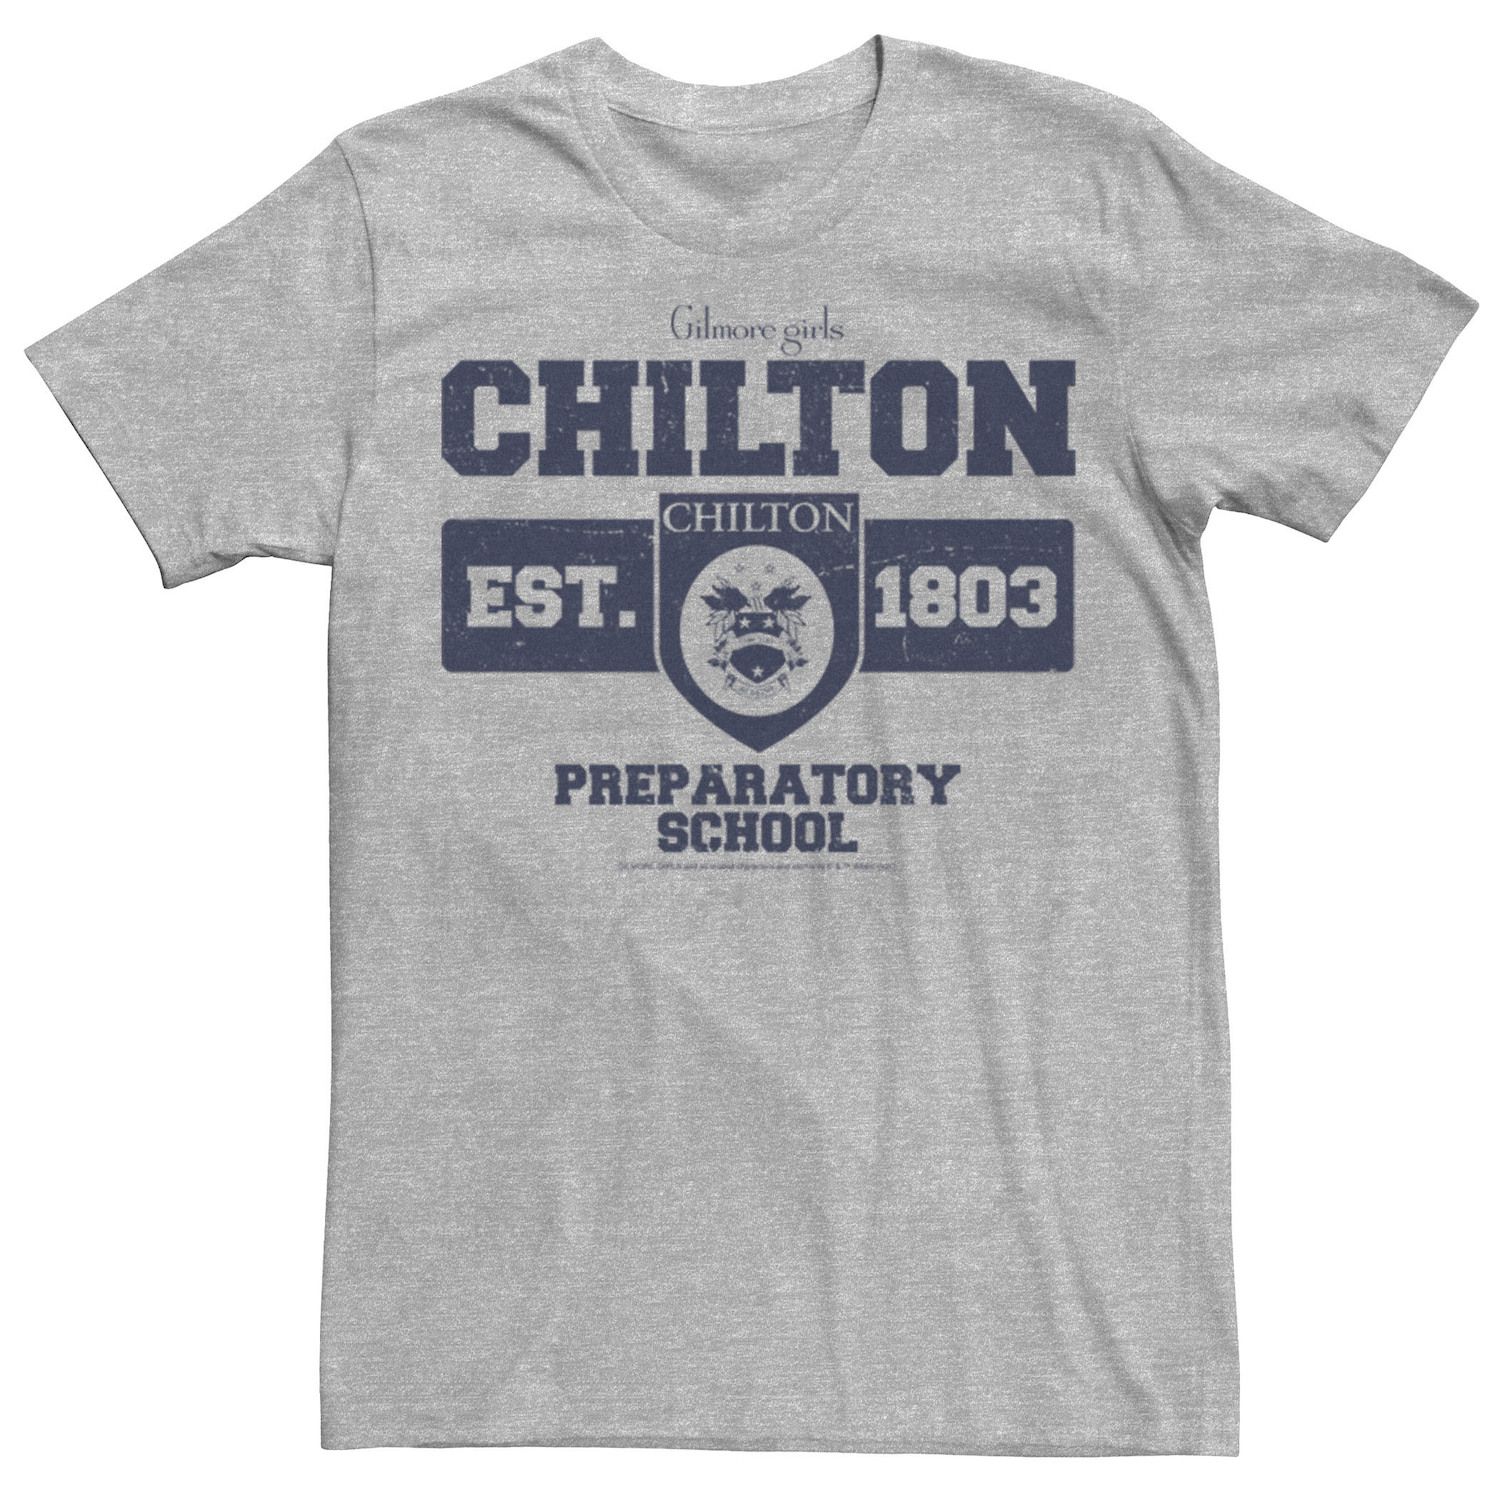 Image for Licensed Character Men's Gilmore Girls Chilton Preparatory School Est. 1803 Tee at Kohl's.